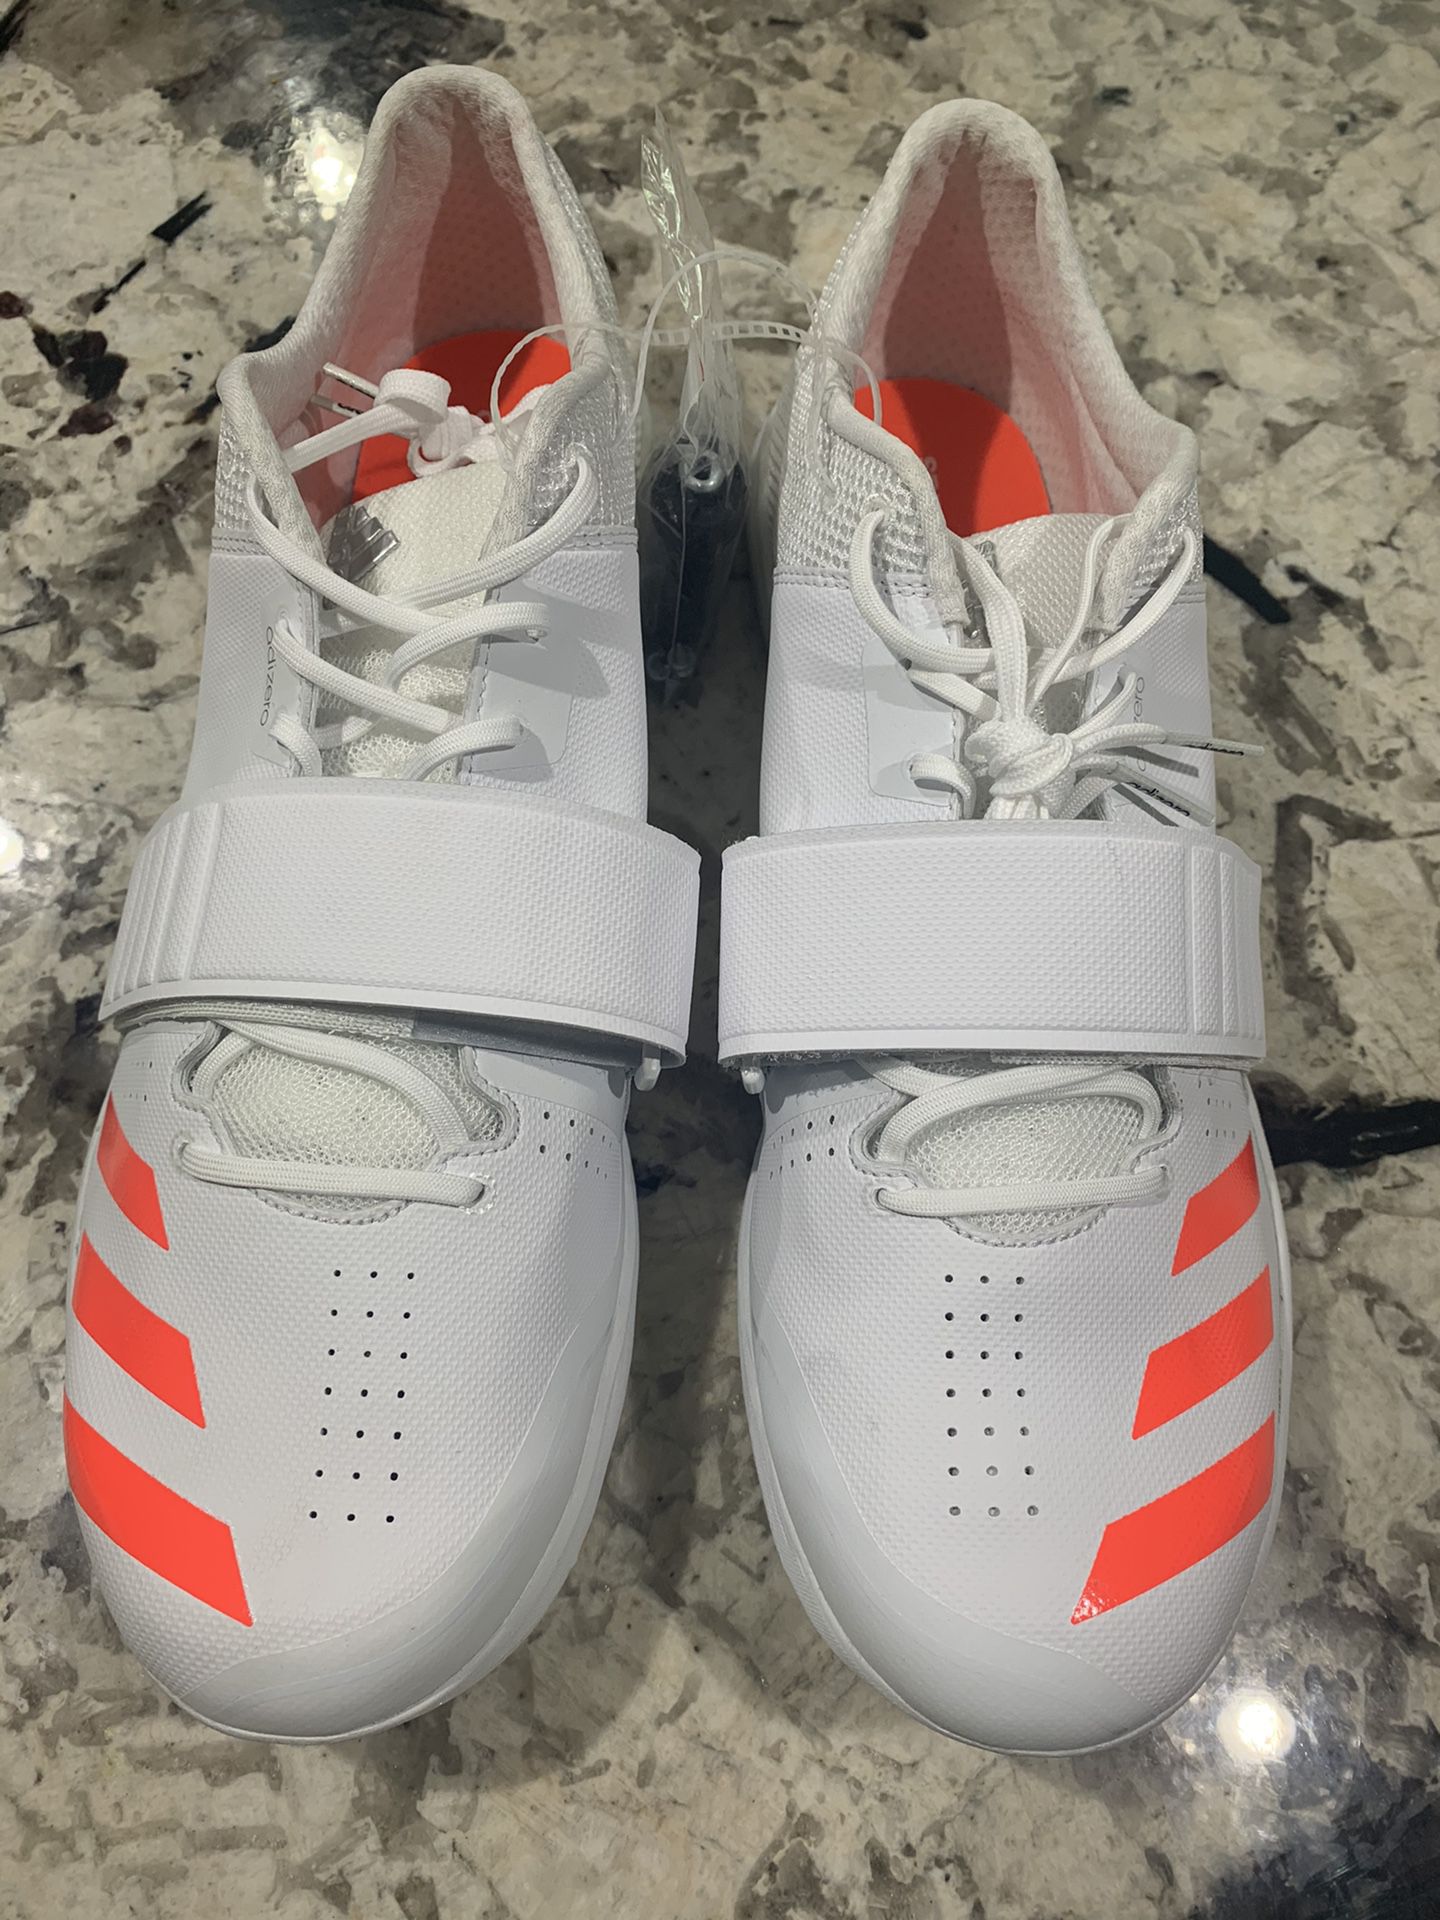 Adidas Adizero Cleats White/Tangerine Sz. 14.5